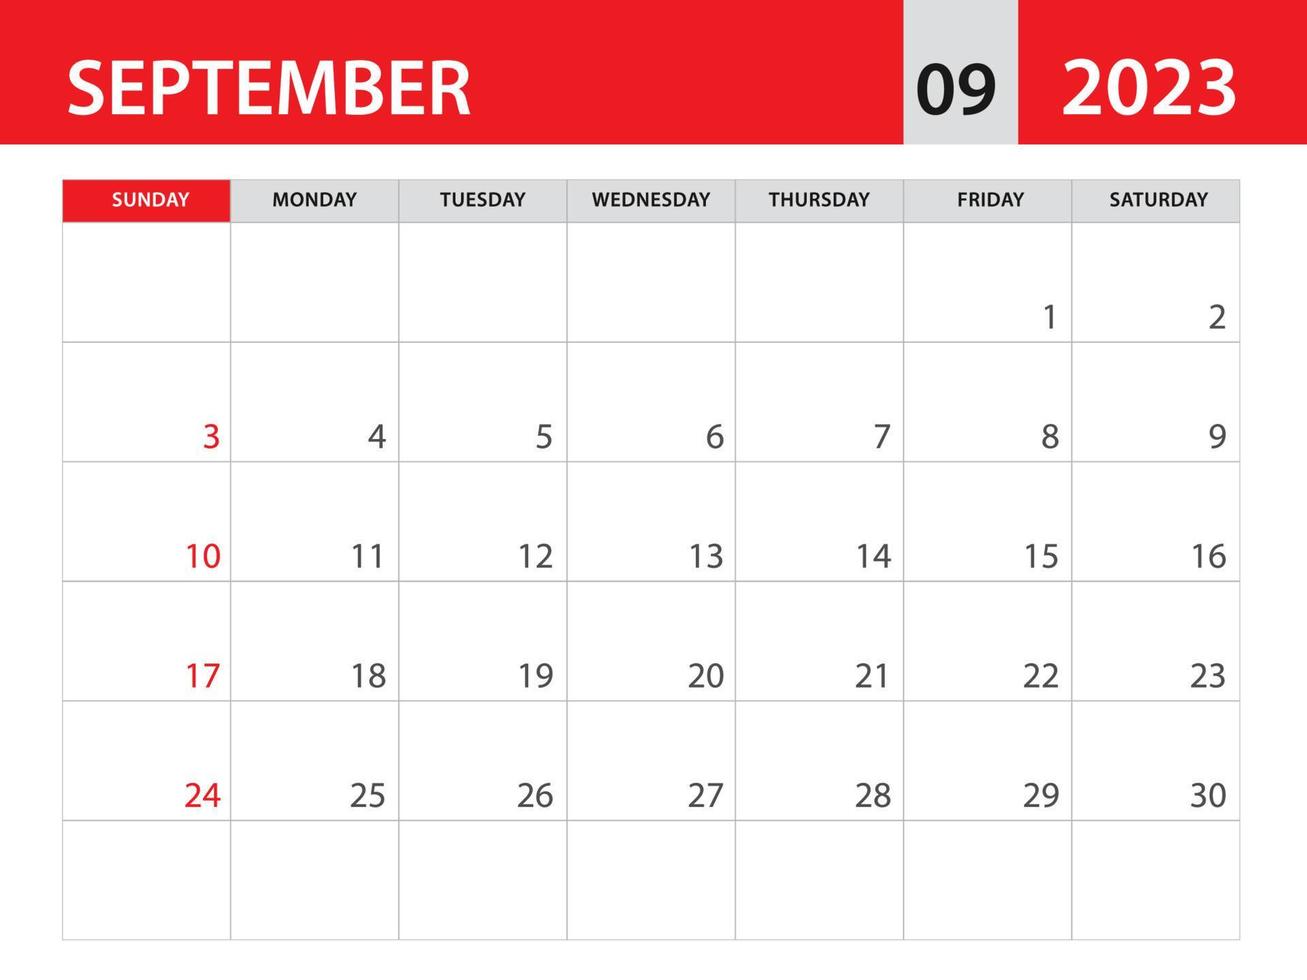 september 2023 mall - kalender 2023 mall vektor, planerare en gång i månaden design, skrivbord kalender 2023, vägg kalender design, minimal stil, annons, affisch, utskrift media, horisontell layout vektor